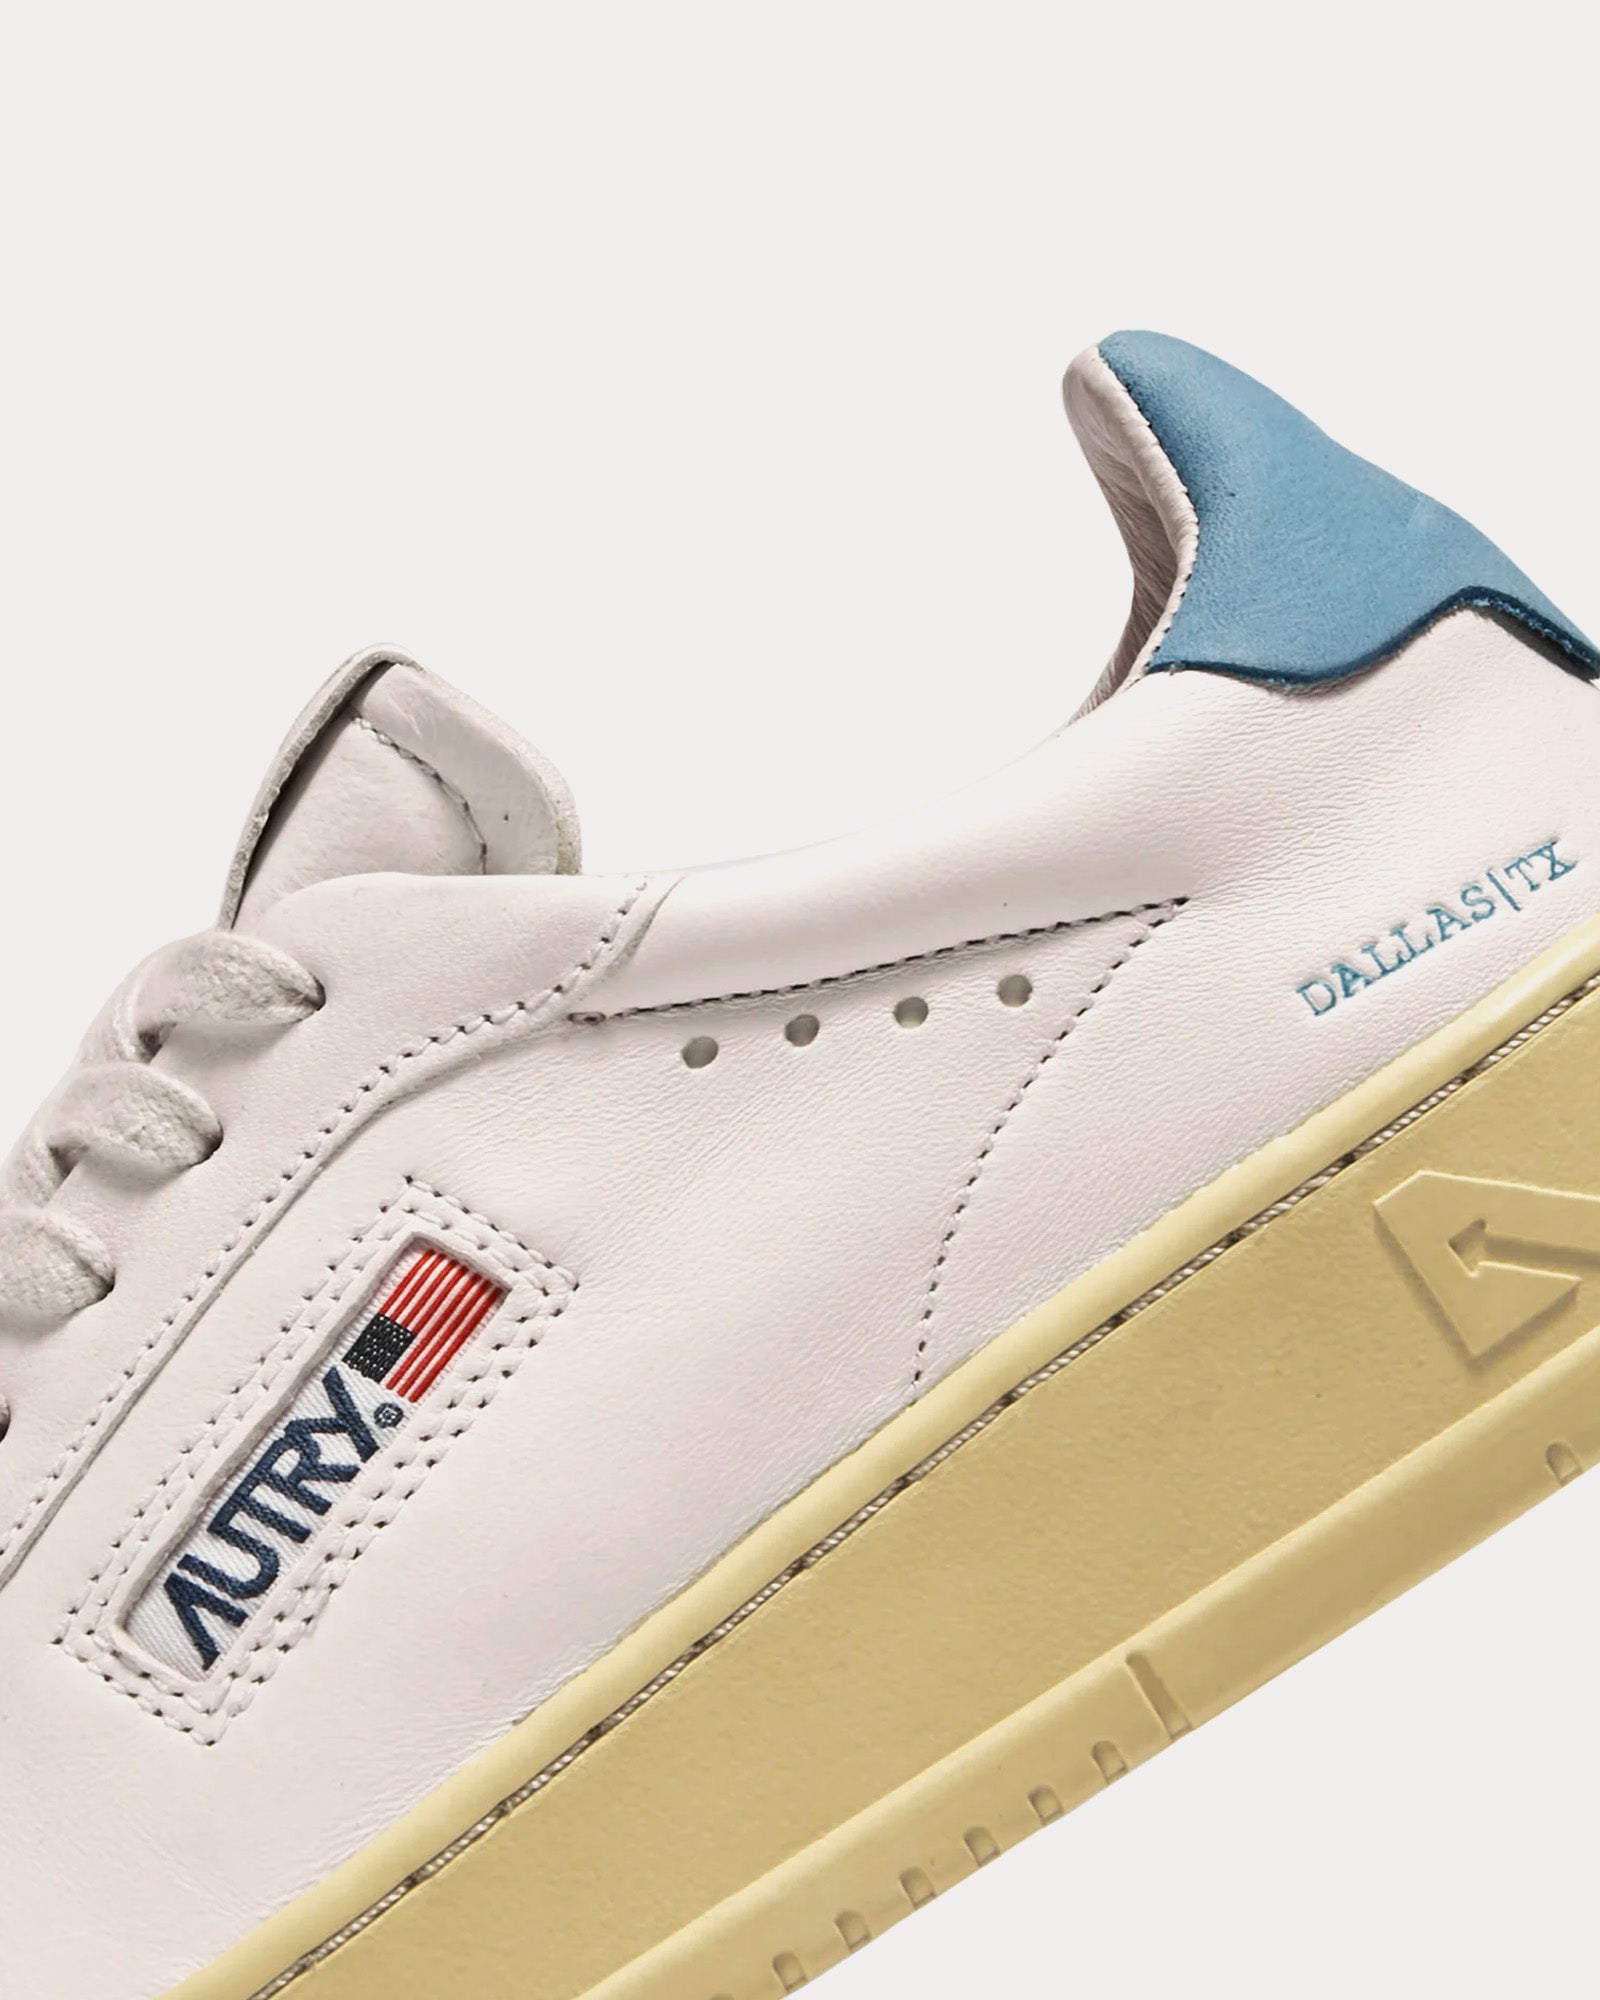 Autry - Dallas Goatskin & Nubuck Leather White / Blue Low Top Sneakers